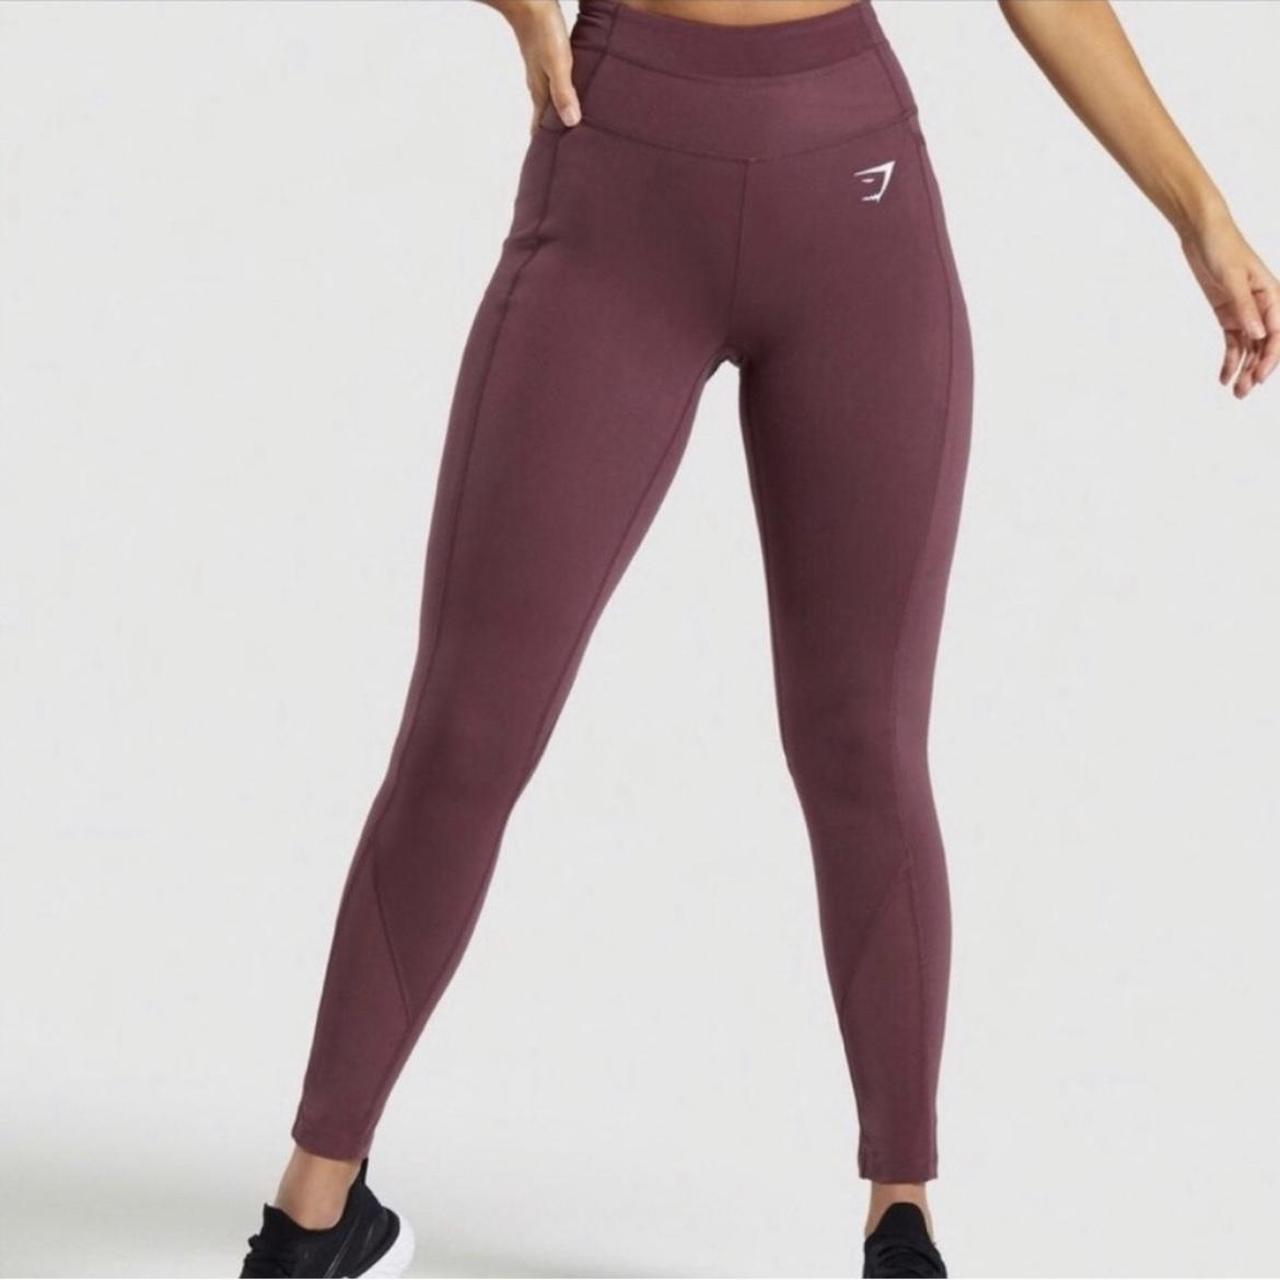 High waisted leggings from the brand Gymshark, size